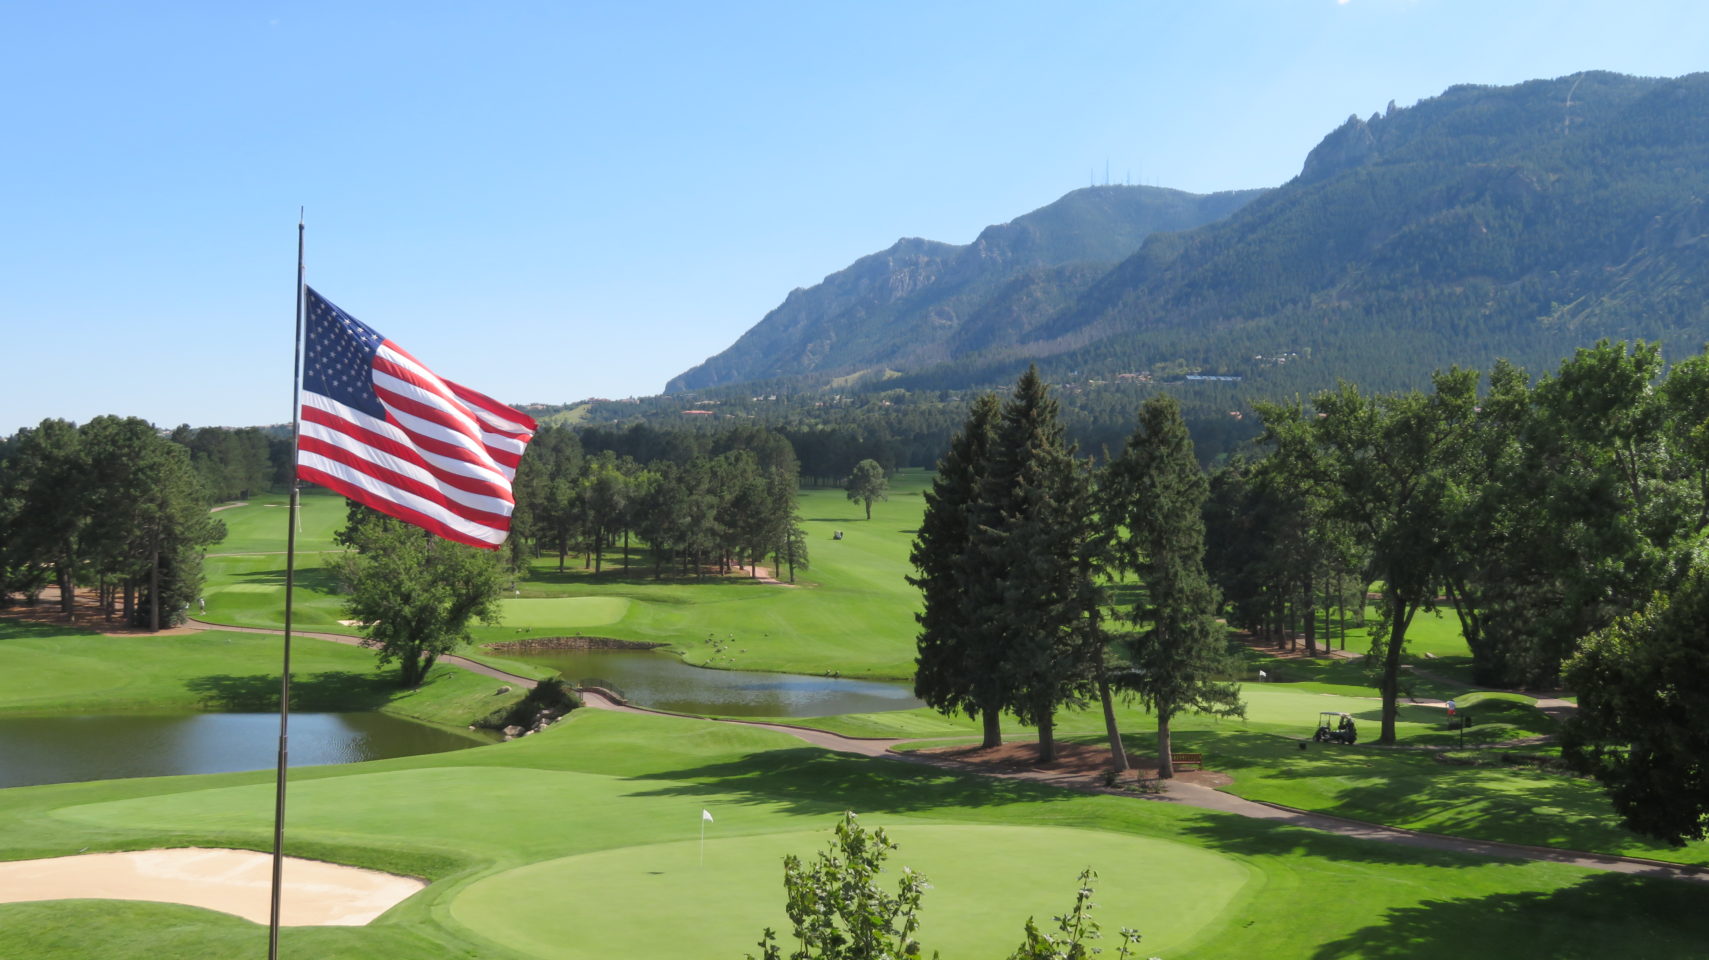 One of three award winning golf courses at The Broadmoor